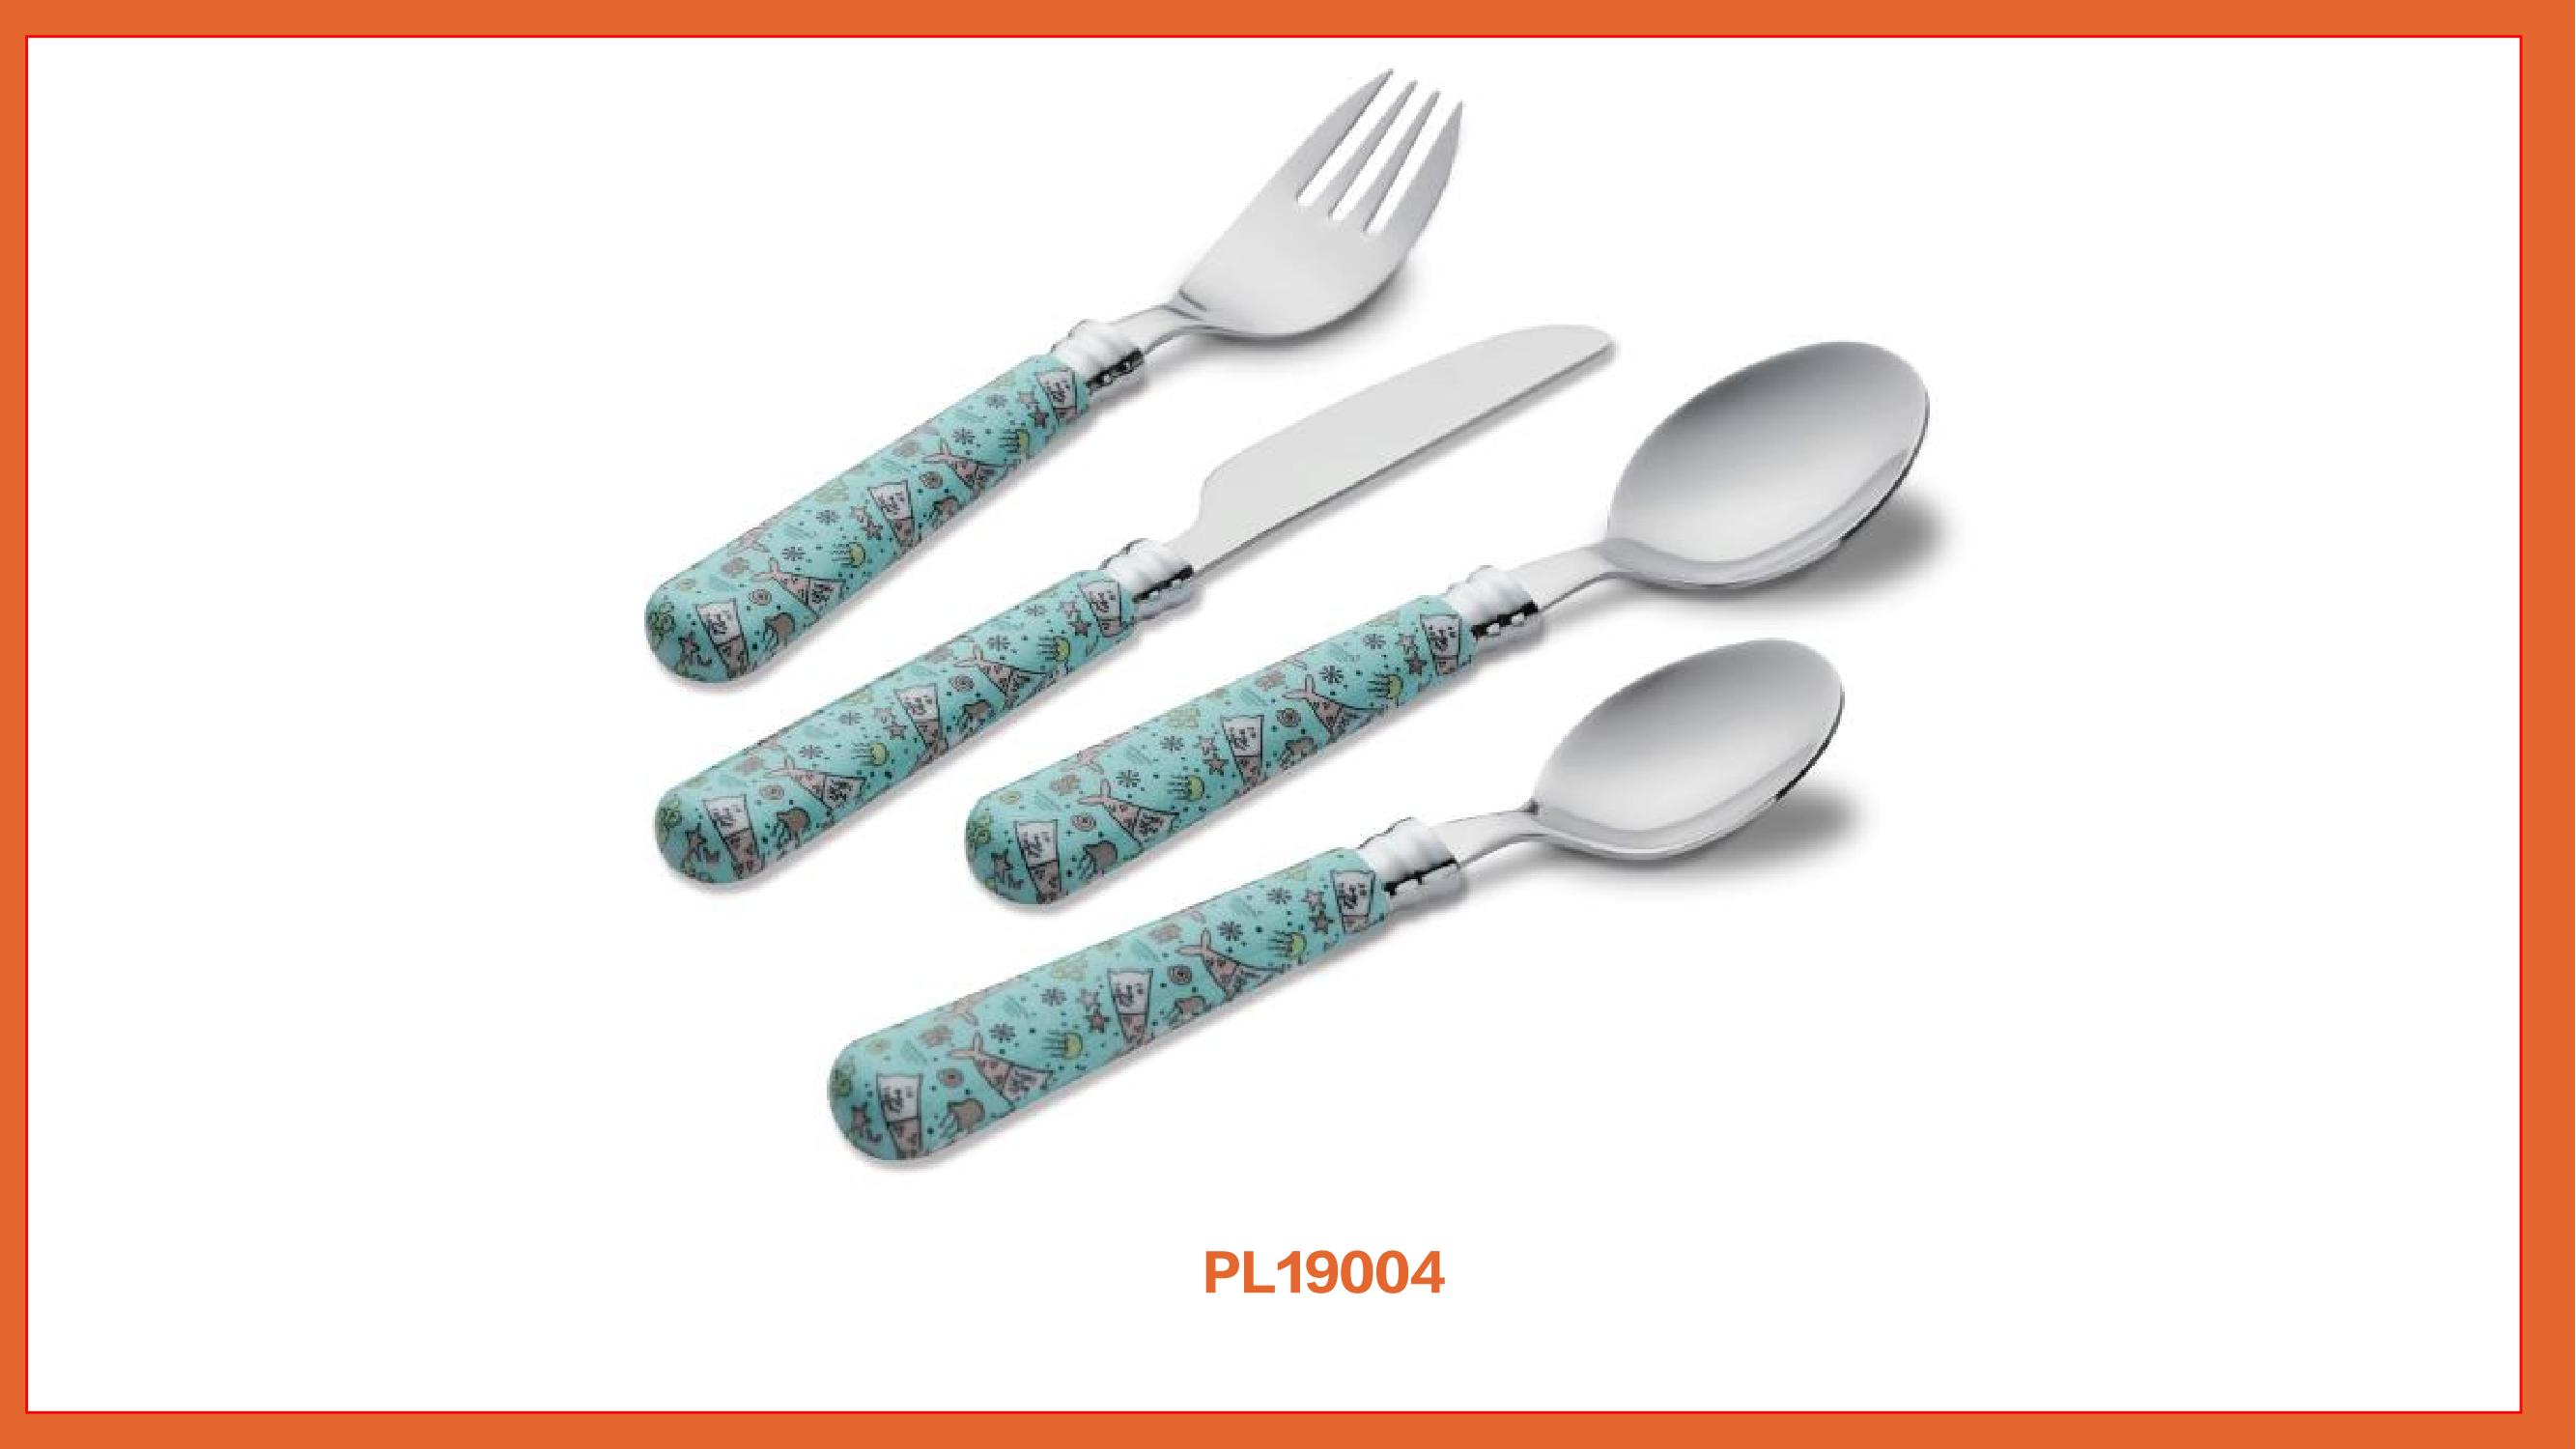 catalogue of plastic handle cutlery_12.jpg